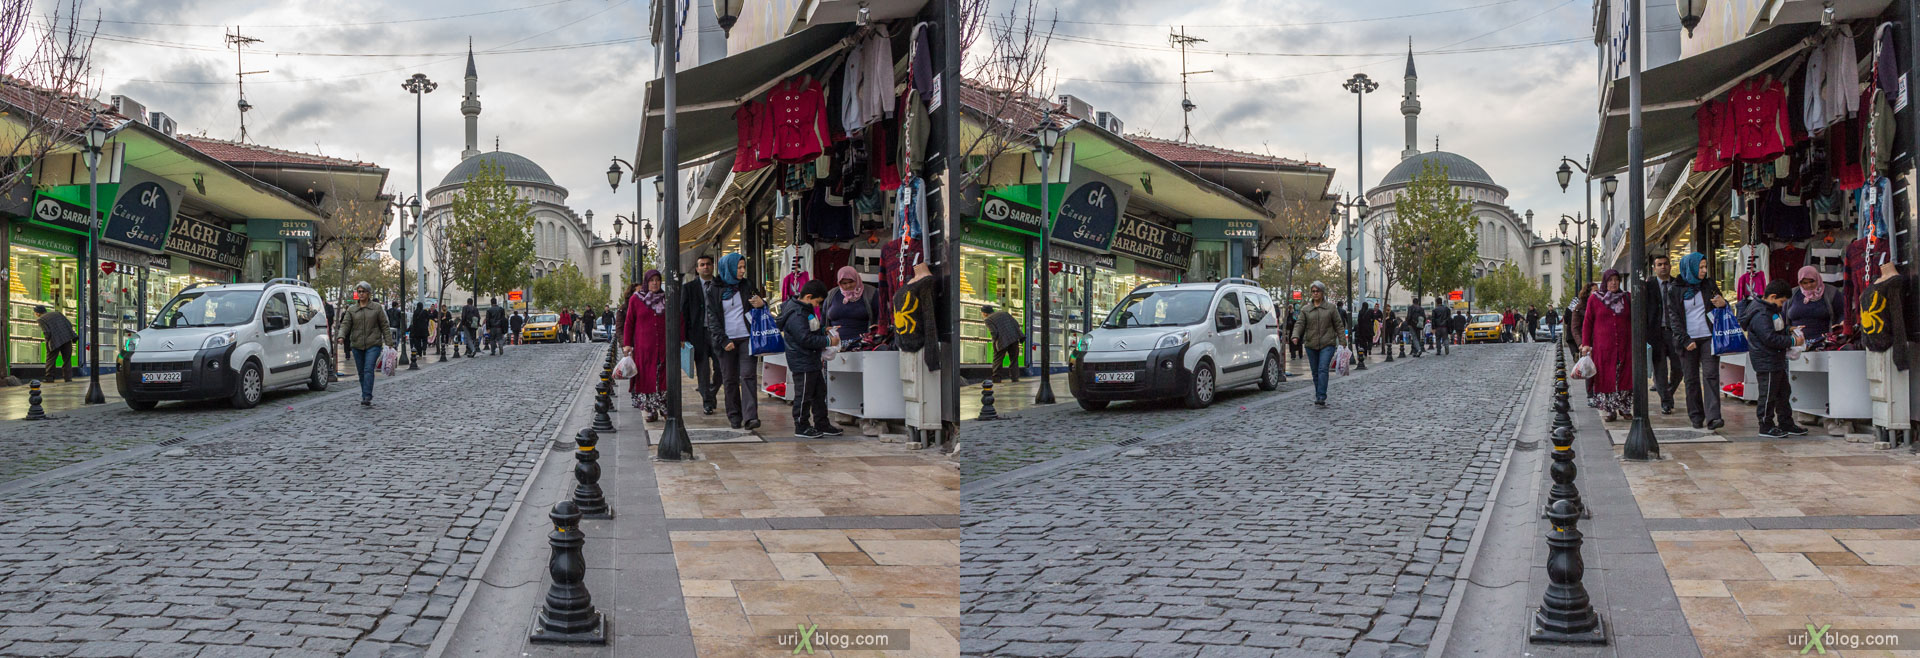 Denizli, Turkey, city, 3D, stereo pair, cross-eyed, crossview, cross view stereo pair, stereoscopic, 2014